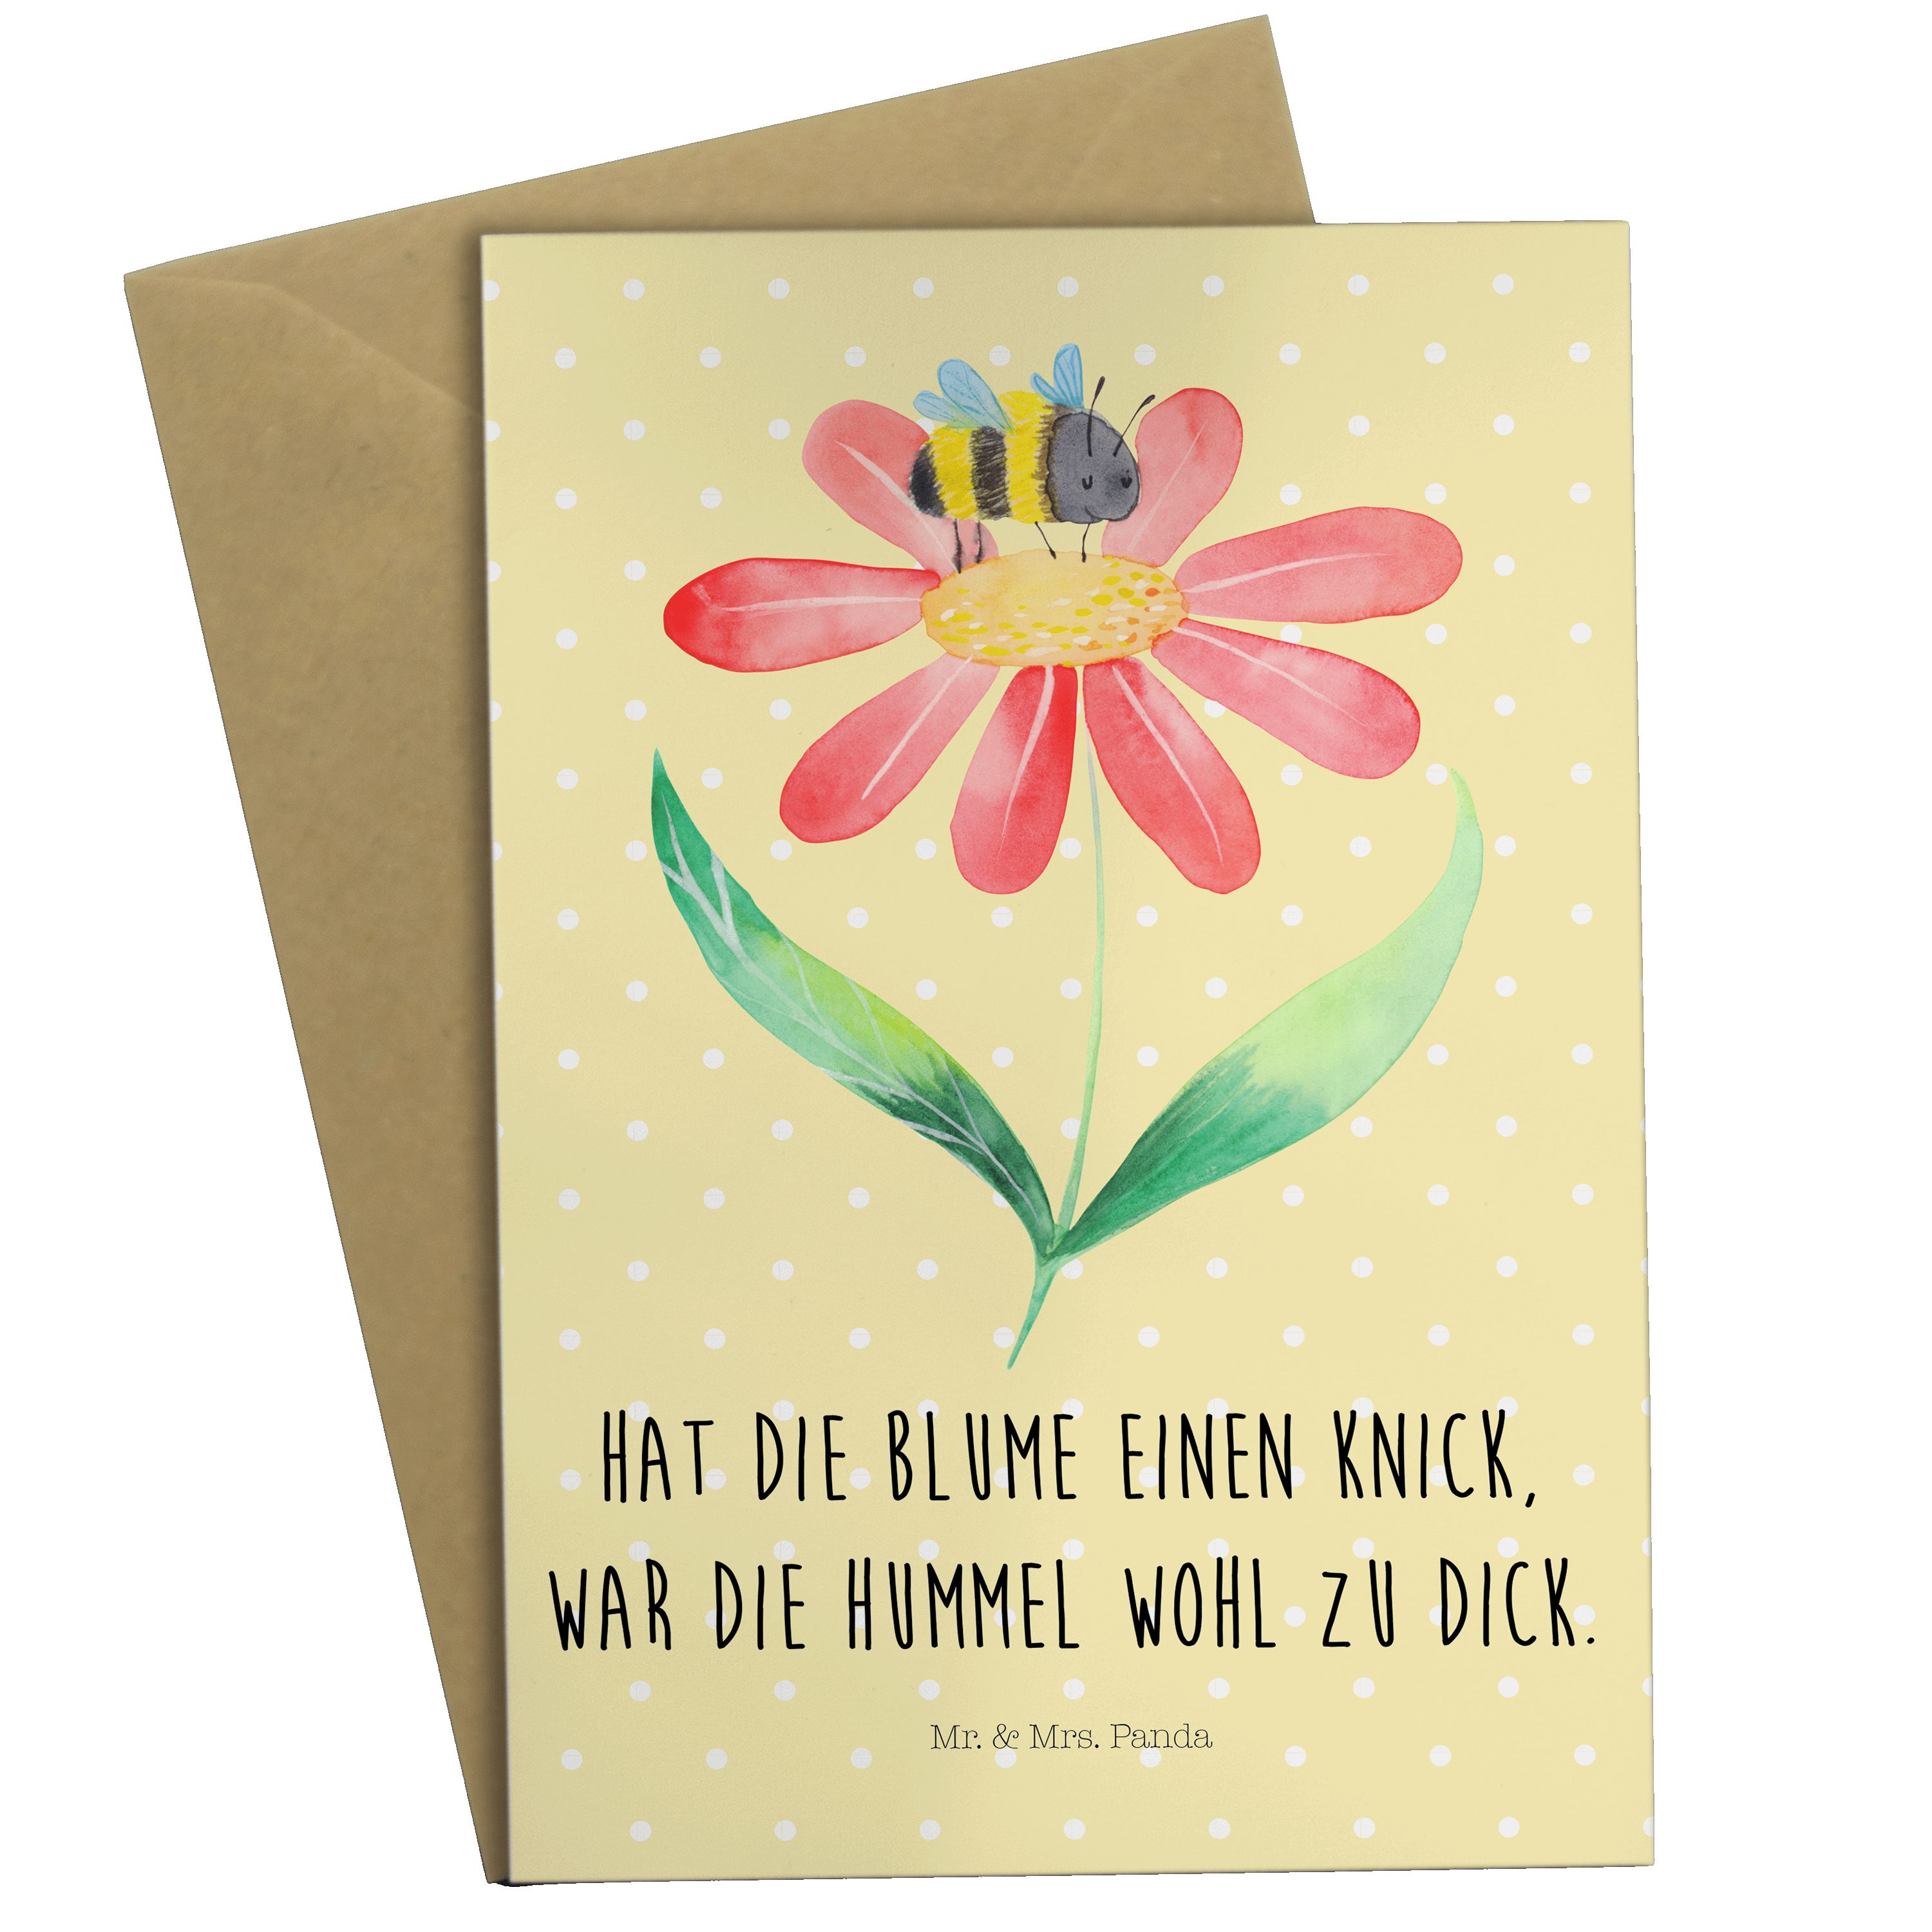 Mr. & Mrs. Panda Grußkarte Hummel Blume - Gelb Pastell - Geschenk, Gute Laune, Natur, Tiermotive